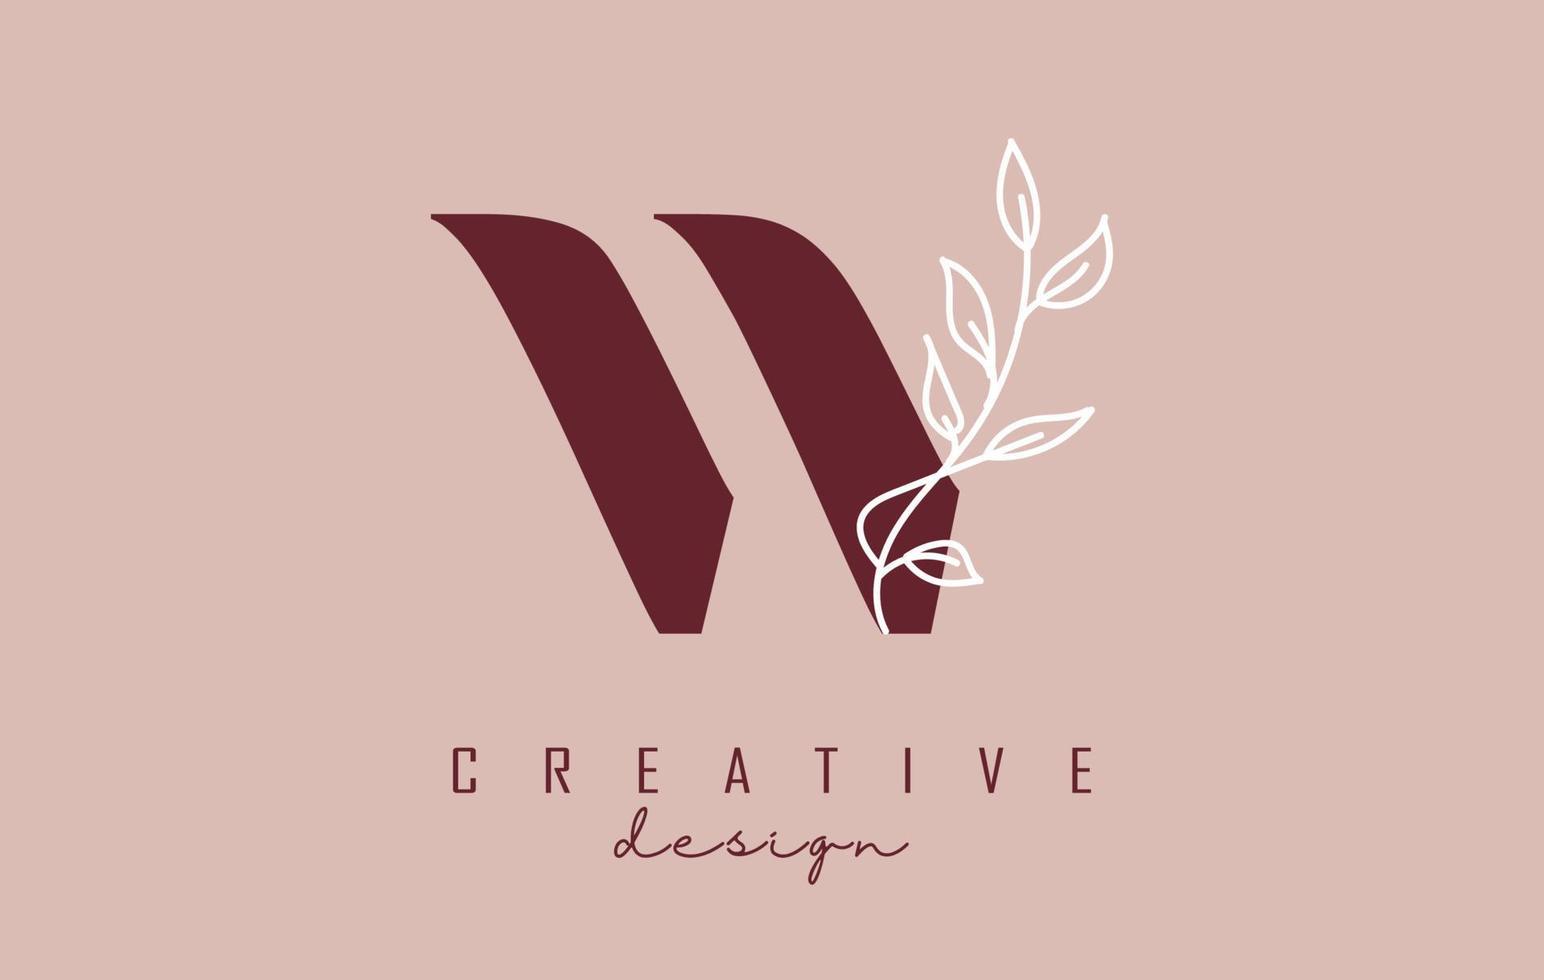 Red W letter logo design with white leaves branch vector illustration.